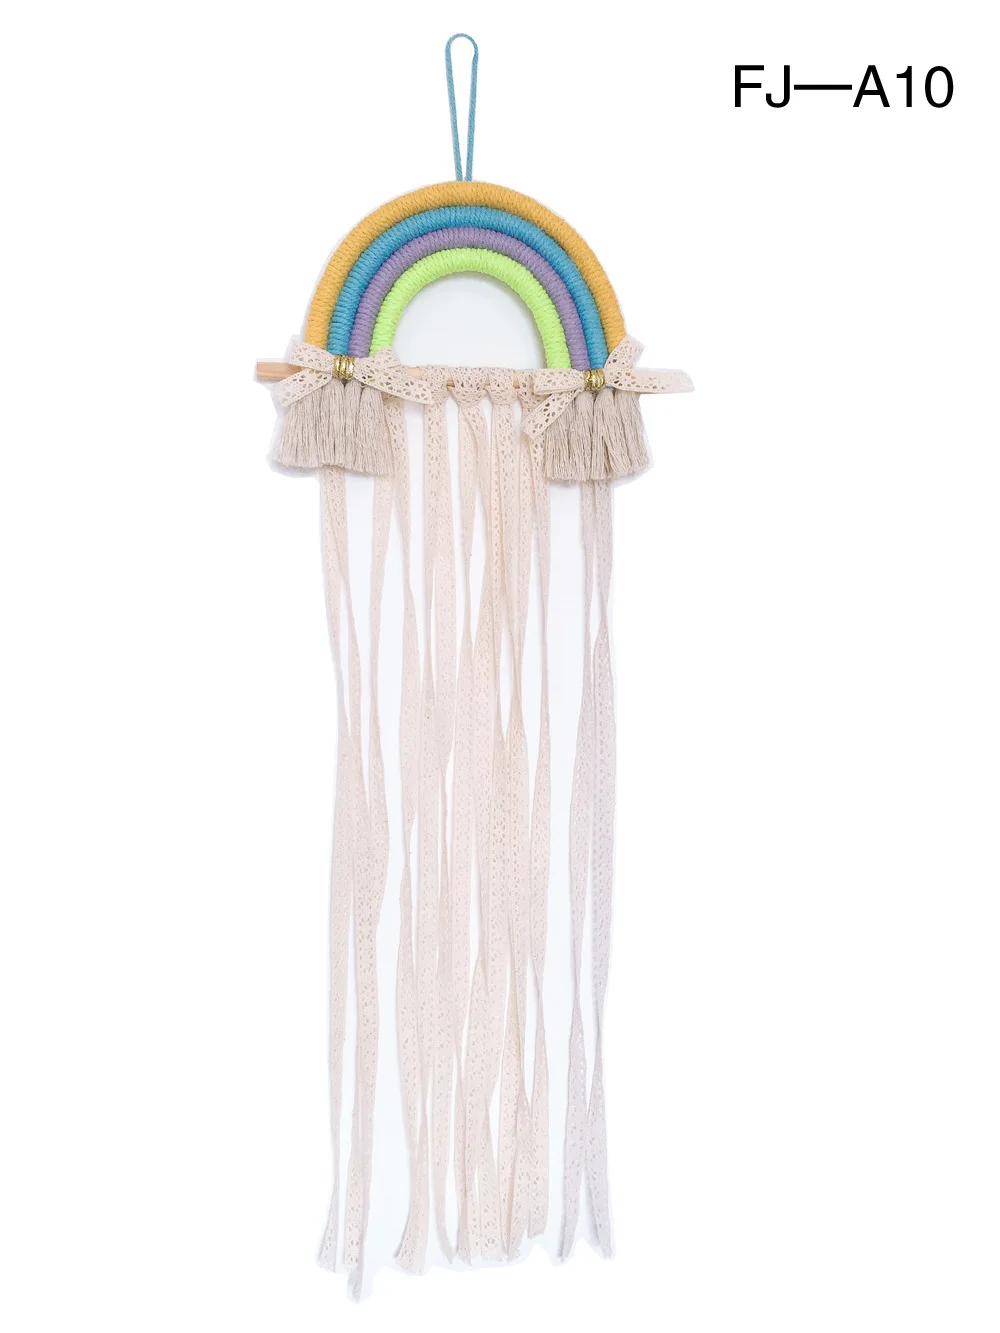 rainbow tassels hair bows holder hanging